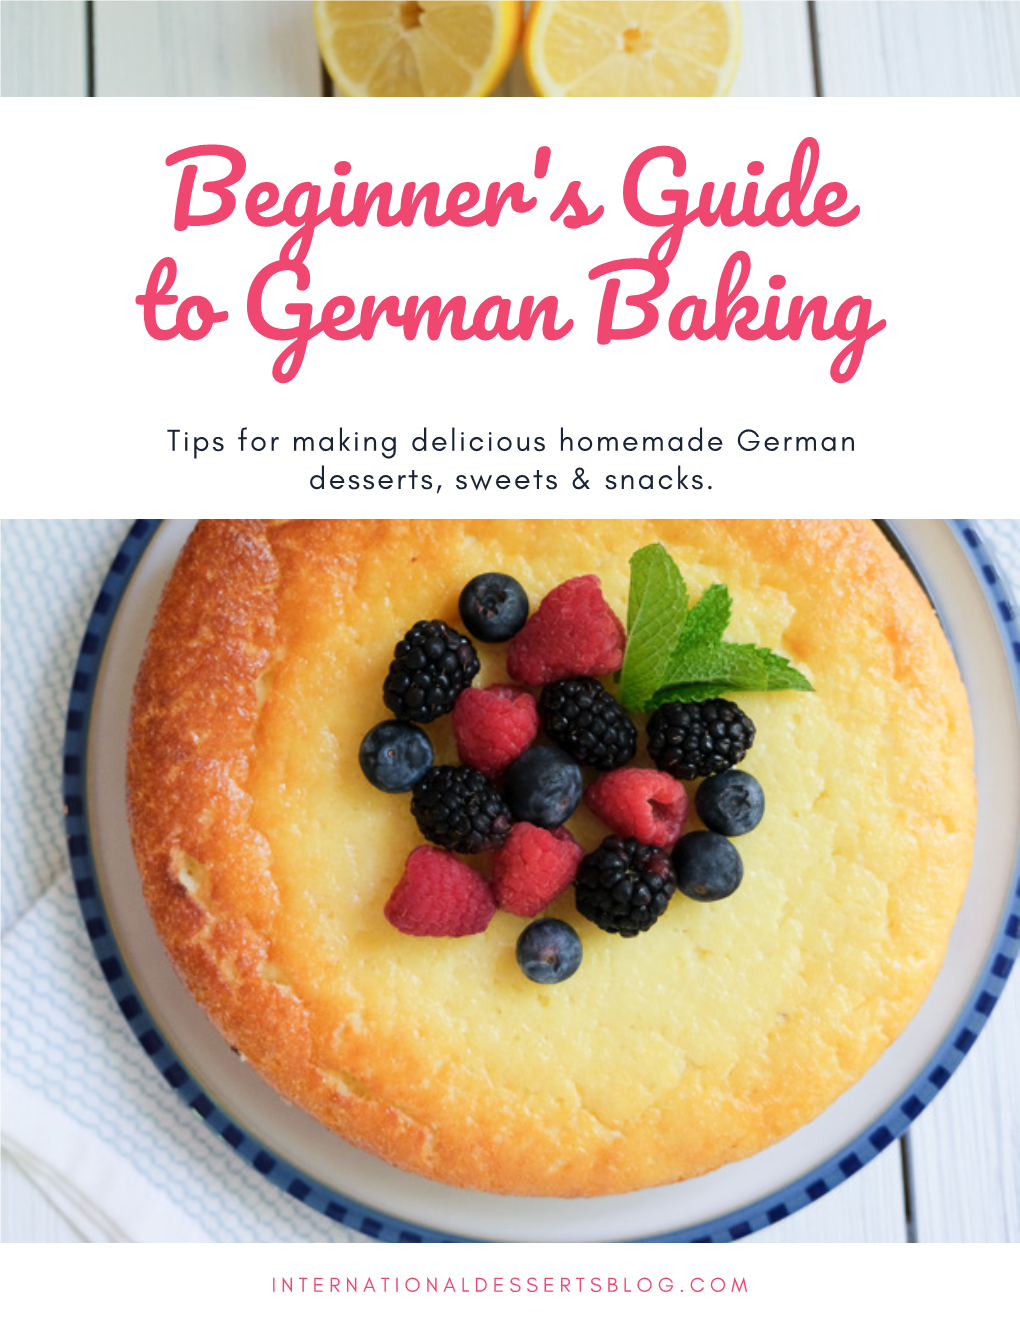 Beginner's Guide to German Baking